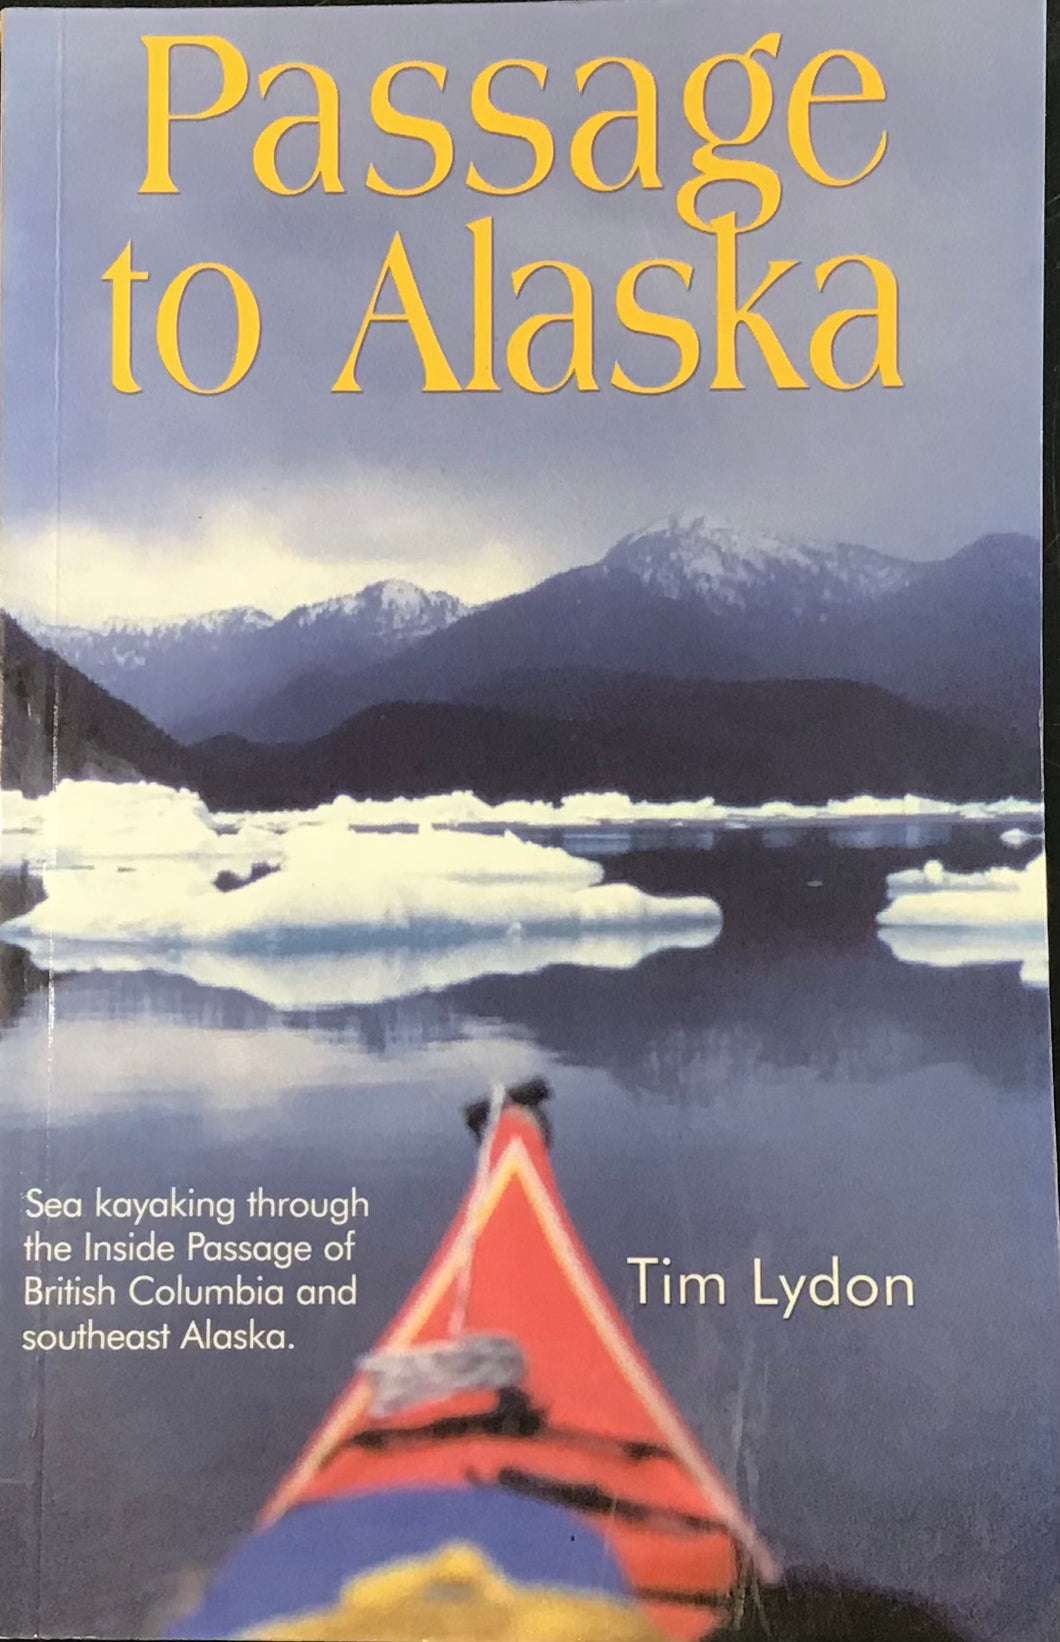 Passage to Alaska, Tim Lydon